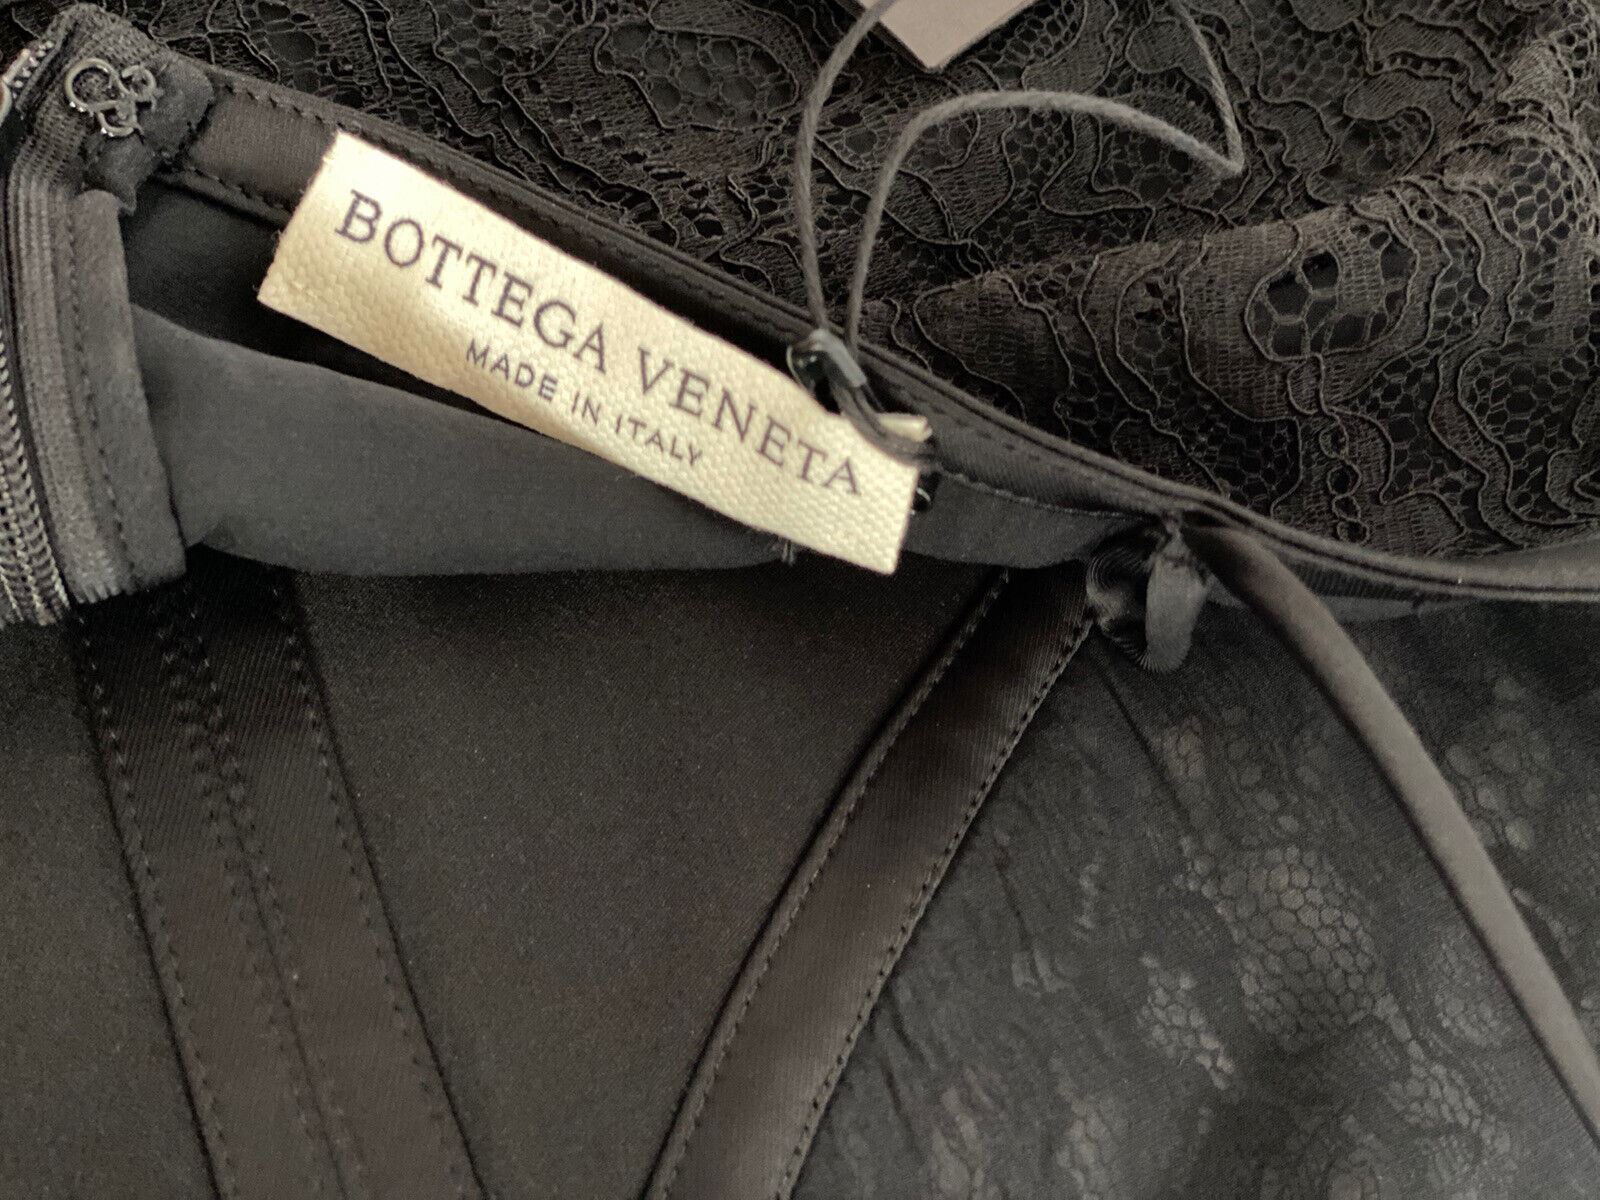 Neu mit Etikett: 2380 $ Bottega Veneta Schwarzes Schlafkleid für Damen 4 US (40 Bottega) 605980 IT